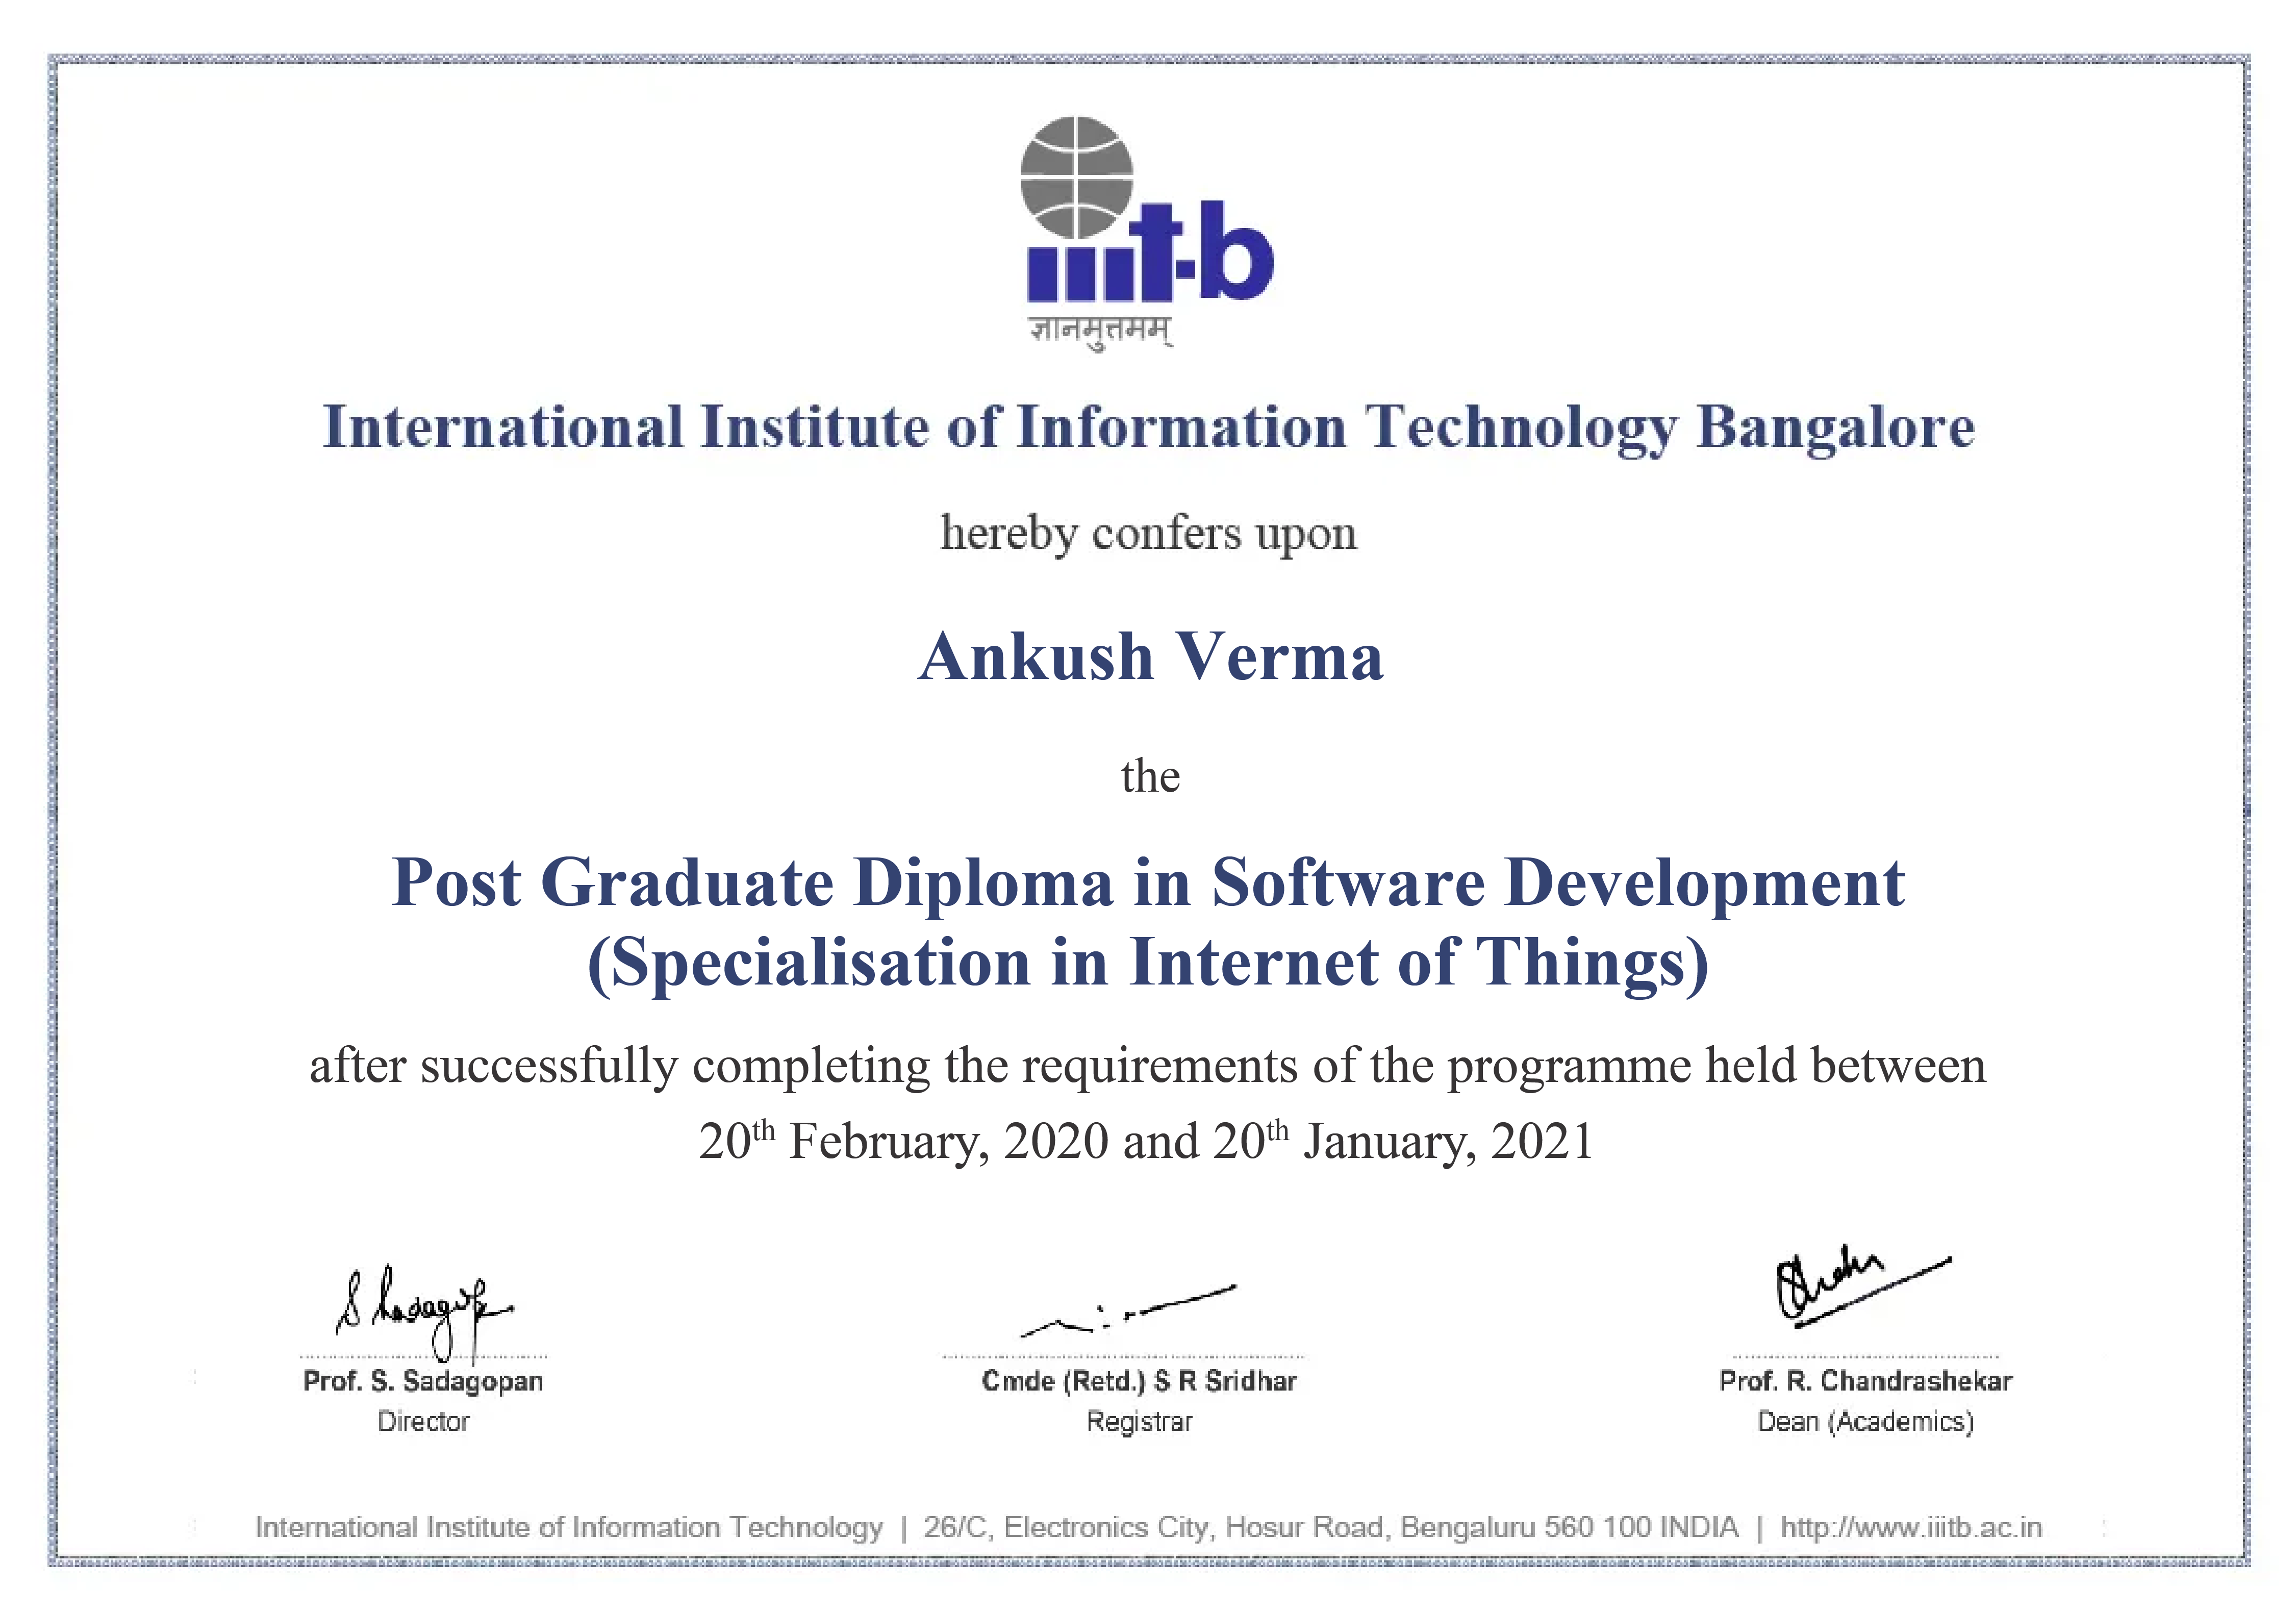 Post Graduate Diploma from IIIT Bangalore